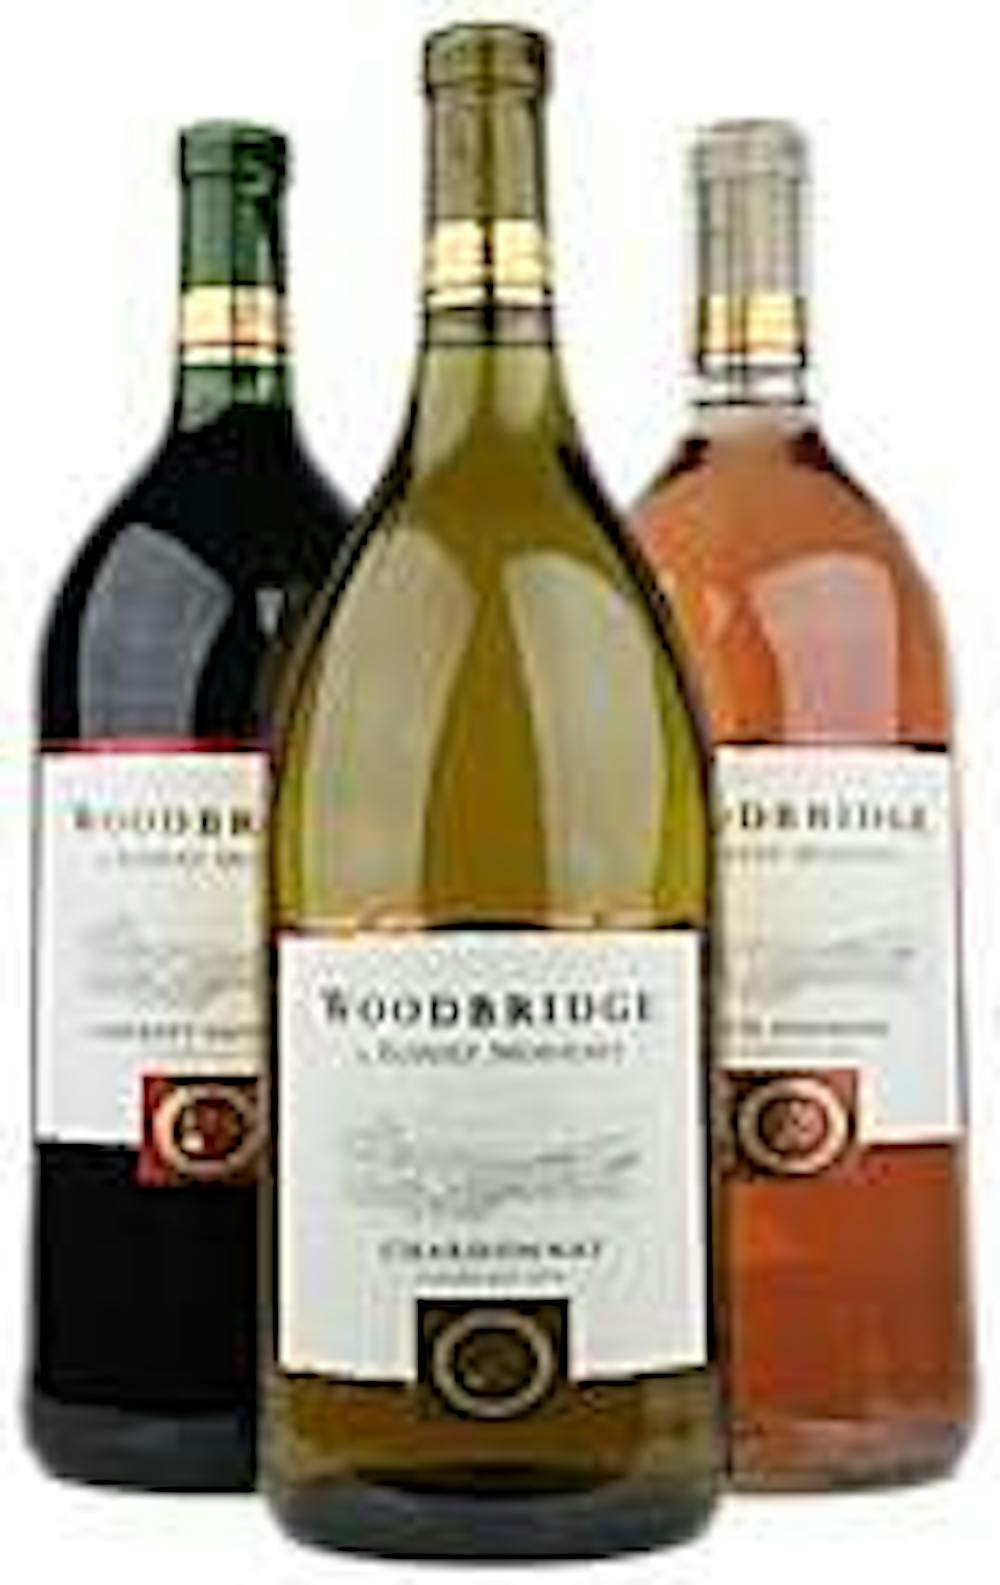 Woodbridge Wine Rebate Offer Form